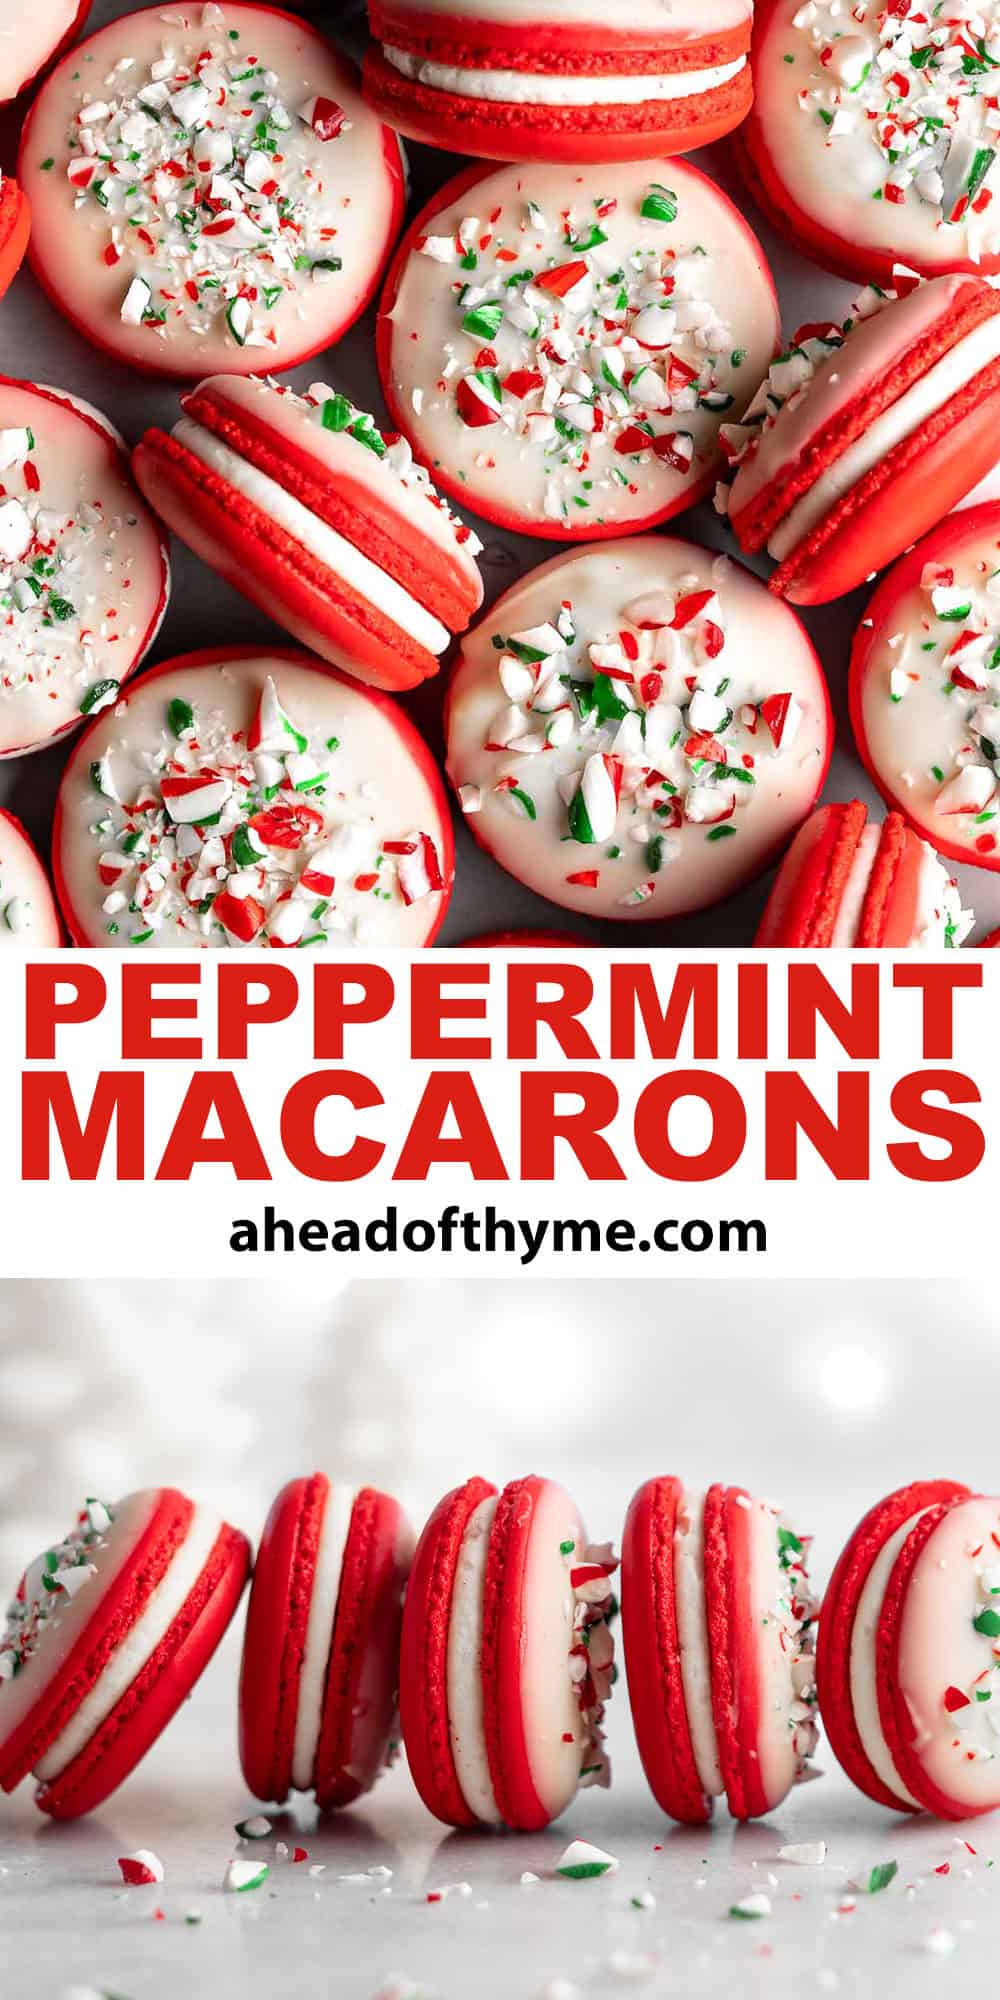 Peppermint Macarons